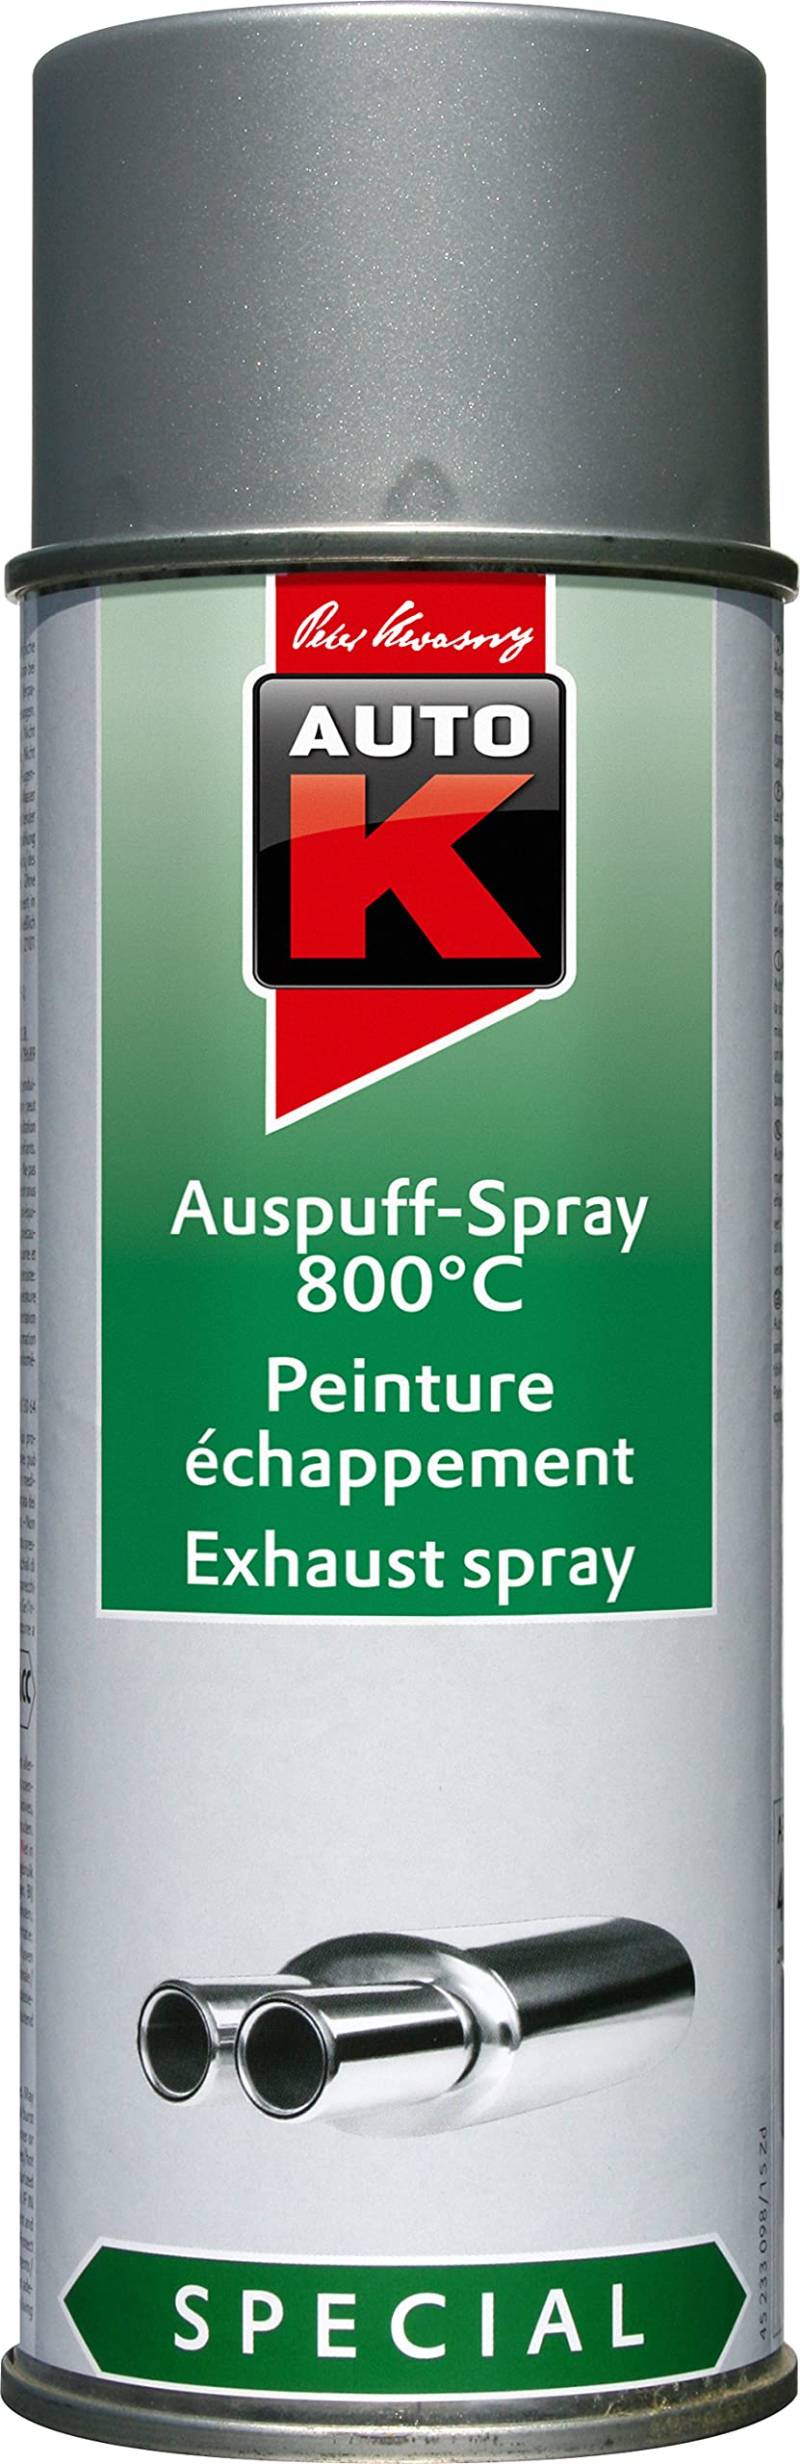 Auto-K KWASNY 233 098 Special Auspuff-Spray Silber 800°C Lackspray 400ml von Auto K